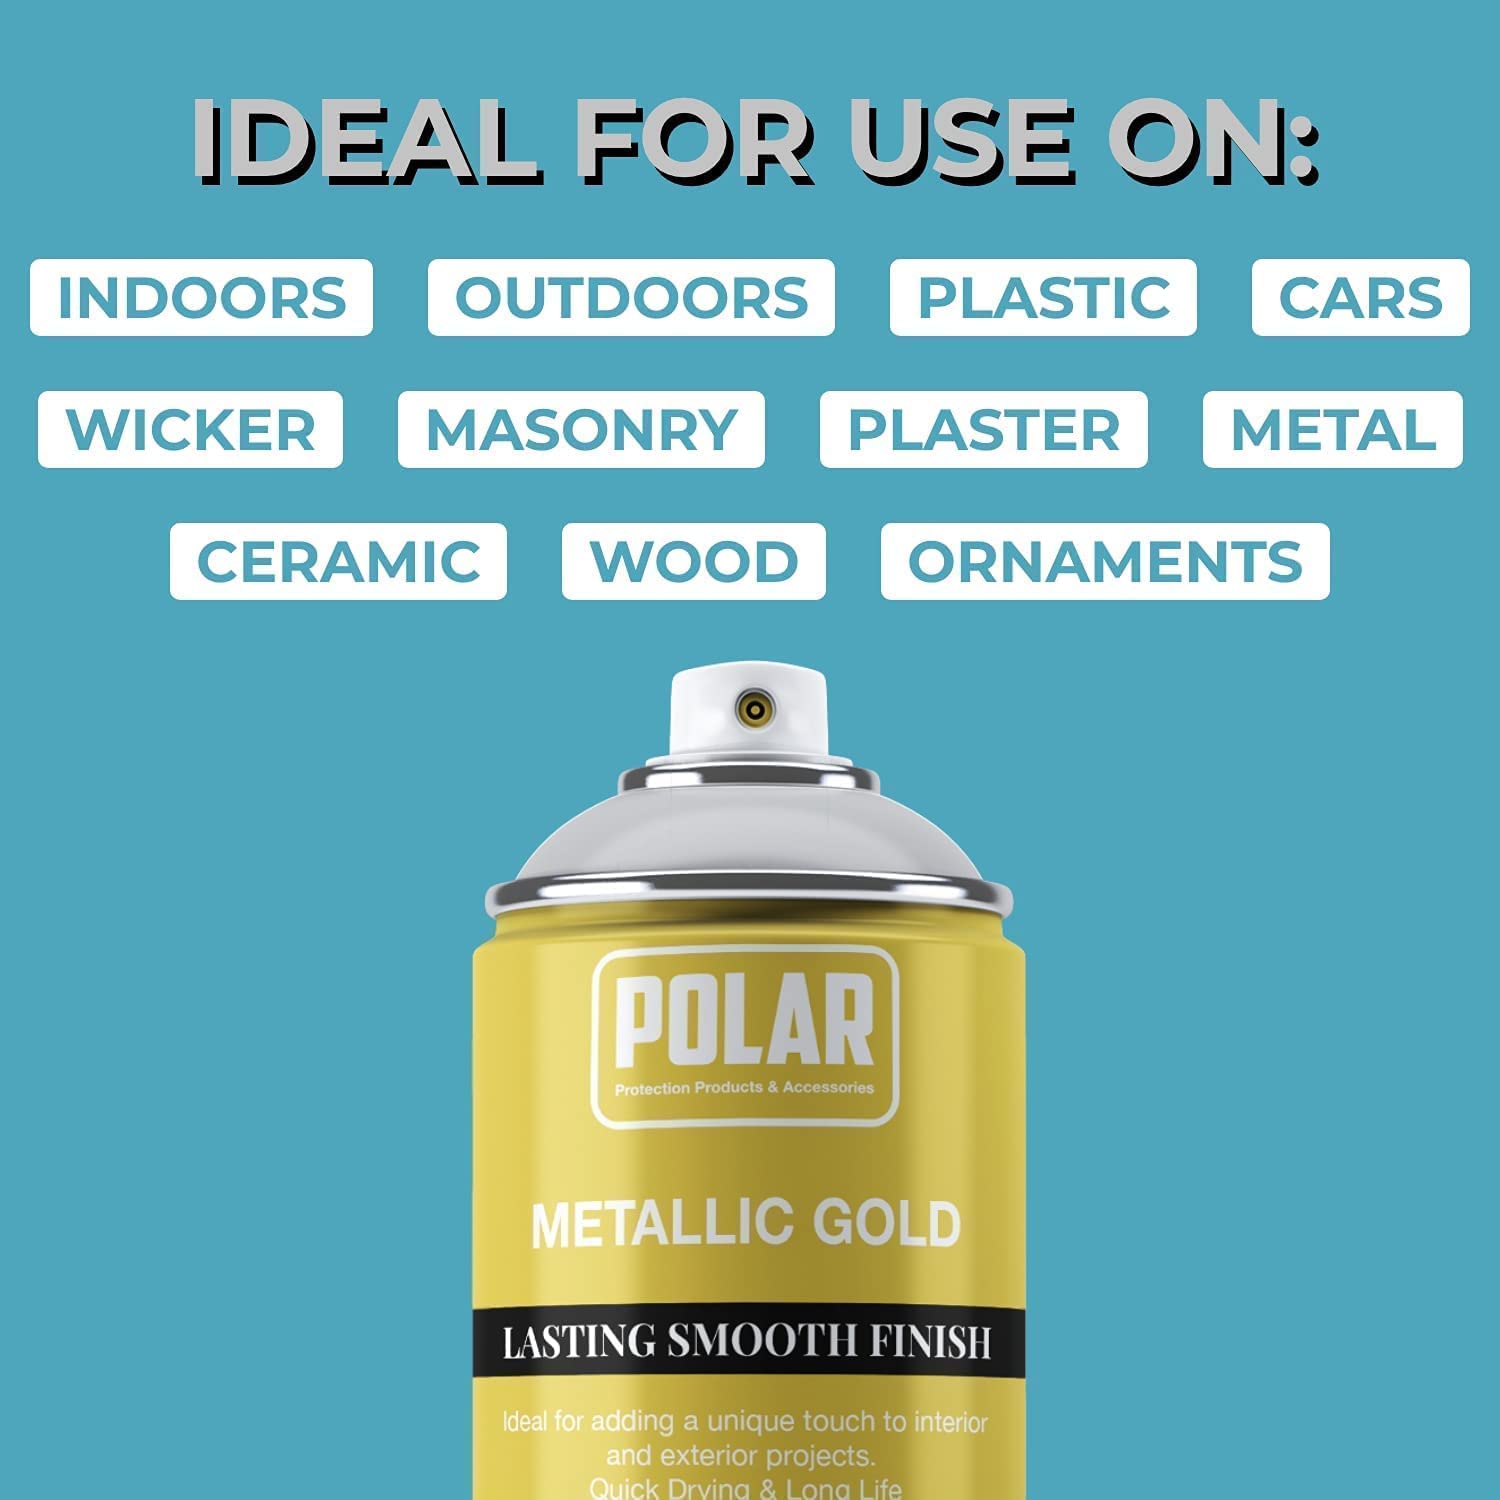 Polar Metallic Gold Spray Paint - 400ml - Multi-Purpose Use ideal use